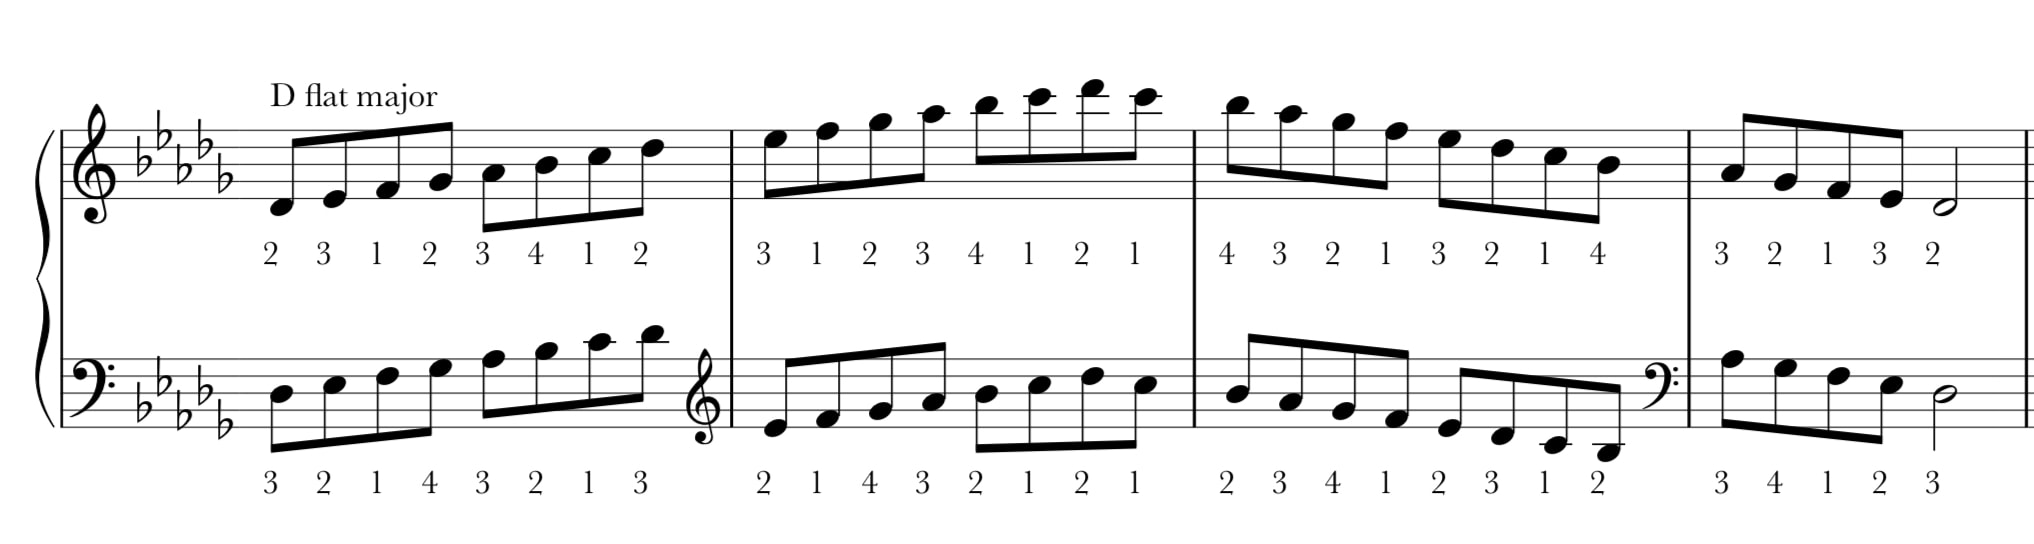 d flat major scale notation